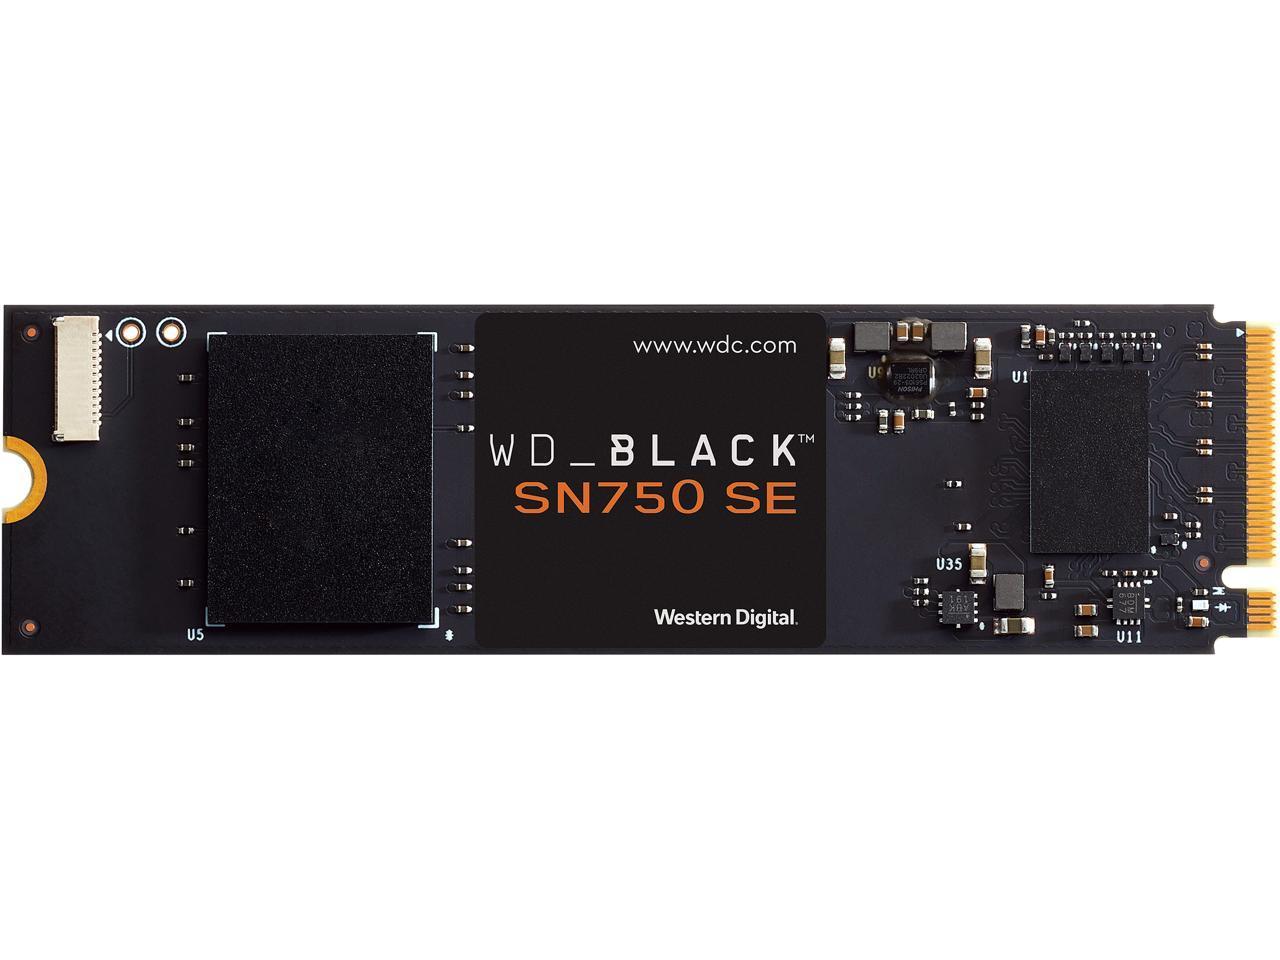 1TB Western Digital Black SN750 SE Gen 4 NVMe PCI SSD for $89.99 Shipped